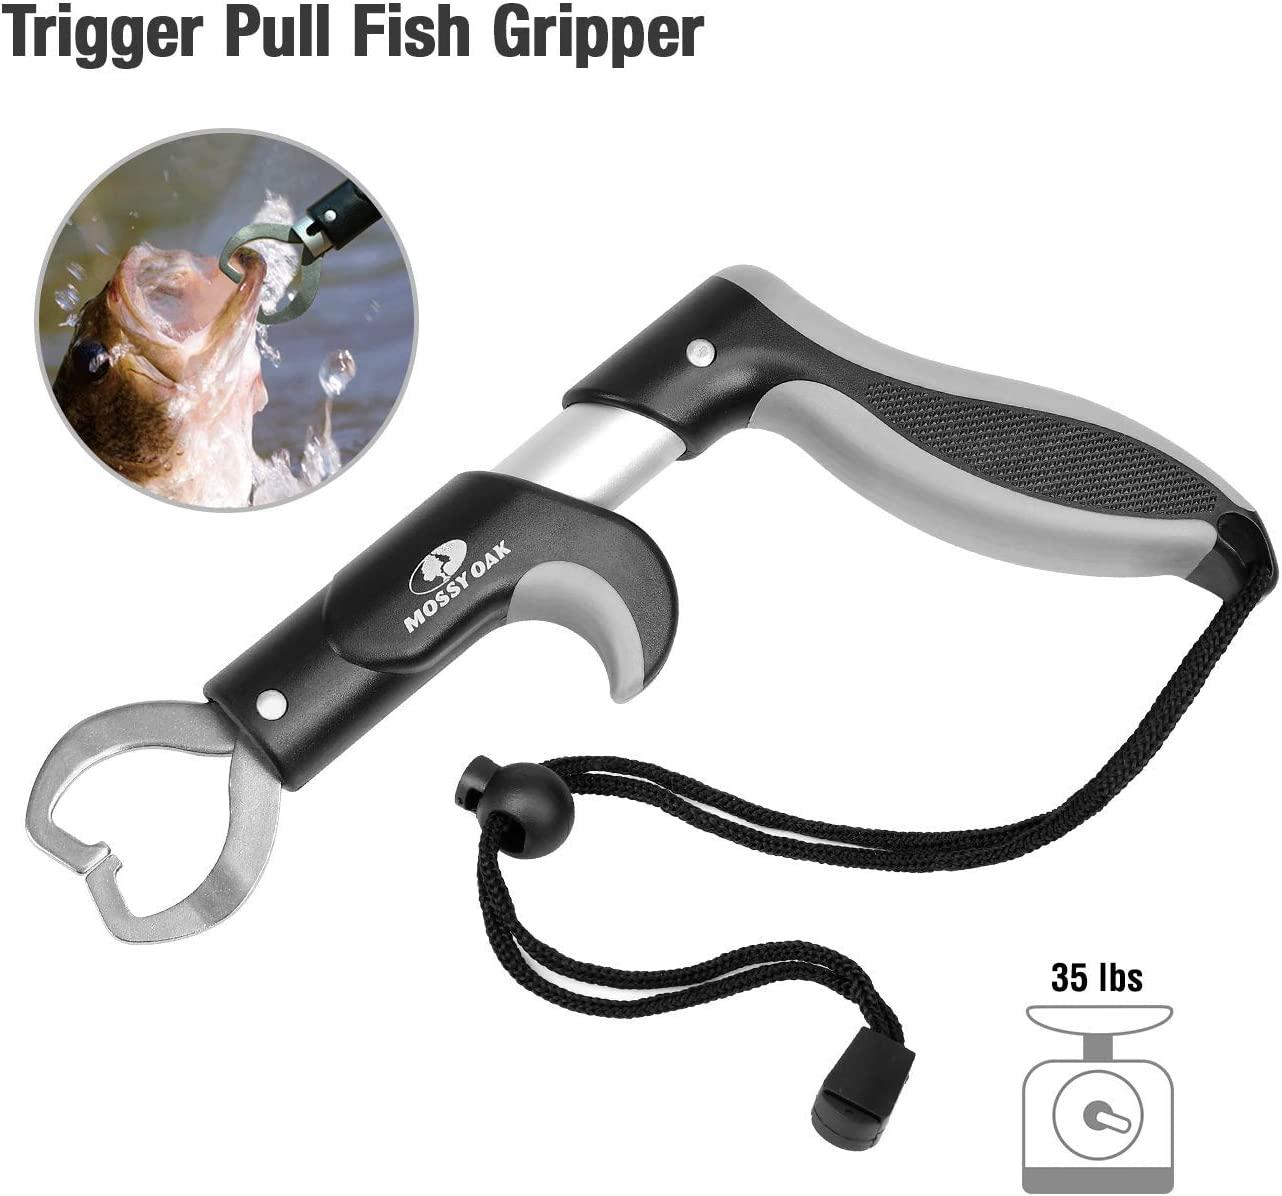 Mossy Oak 4pc Fishing Tool Kit - Pistol Grip Fishing Pliers, Fish